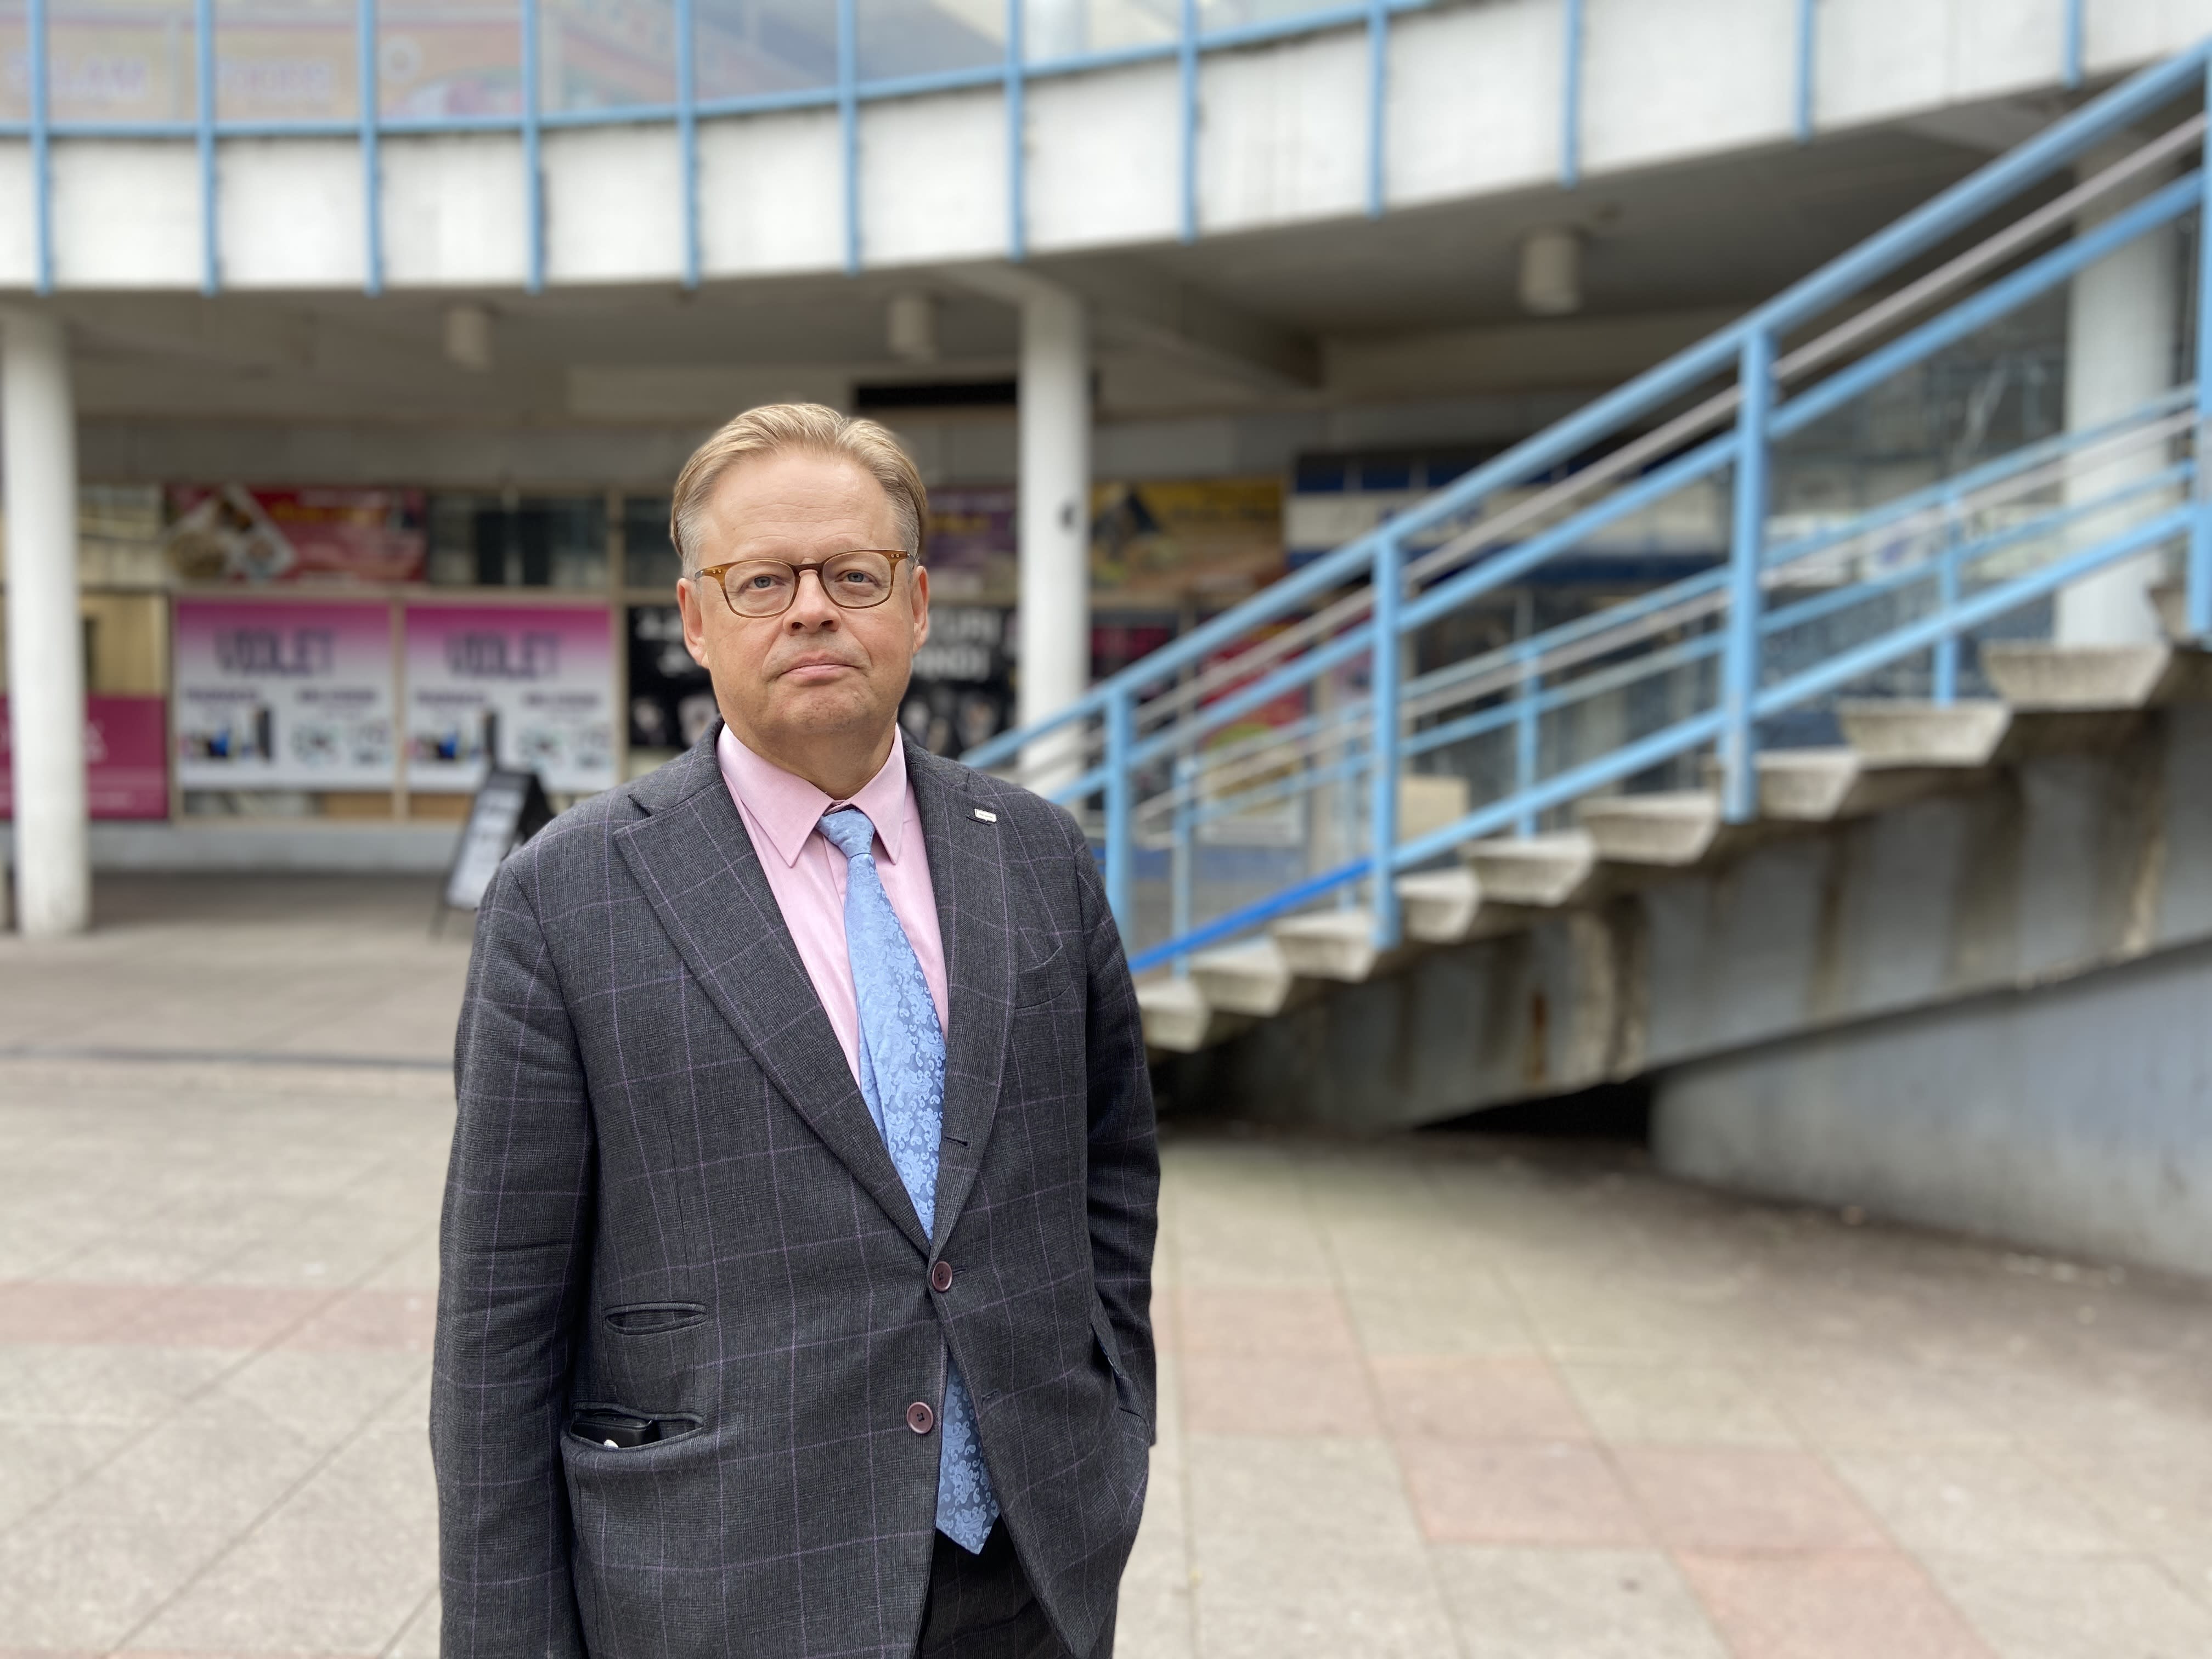 The Helsinki working group is examining the shortage of kindergarten staff